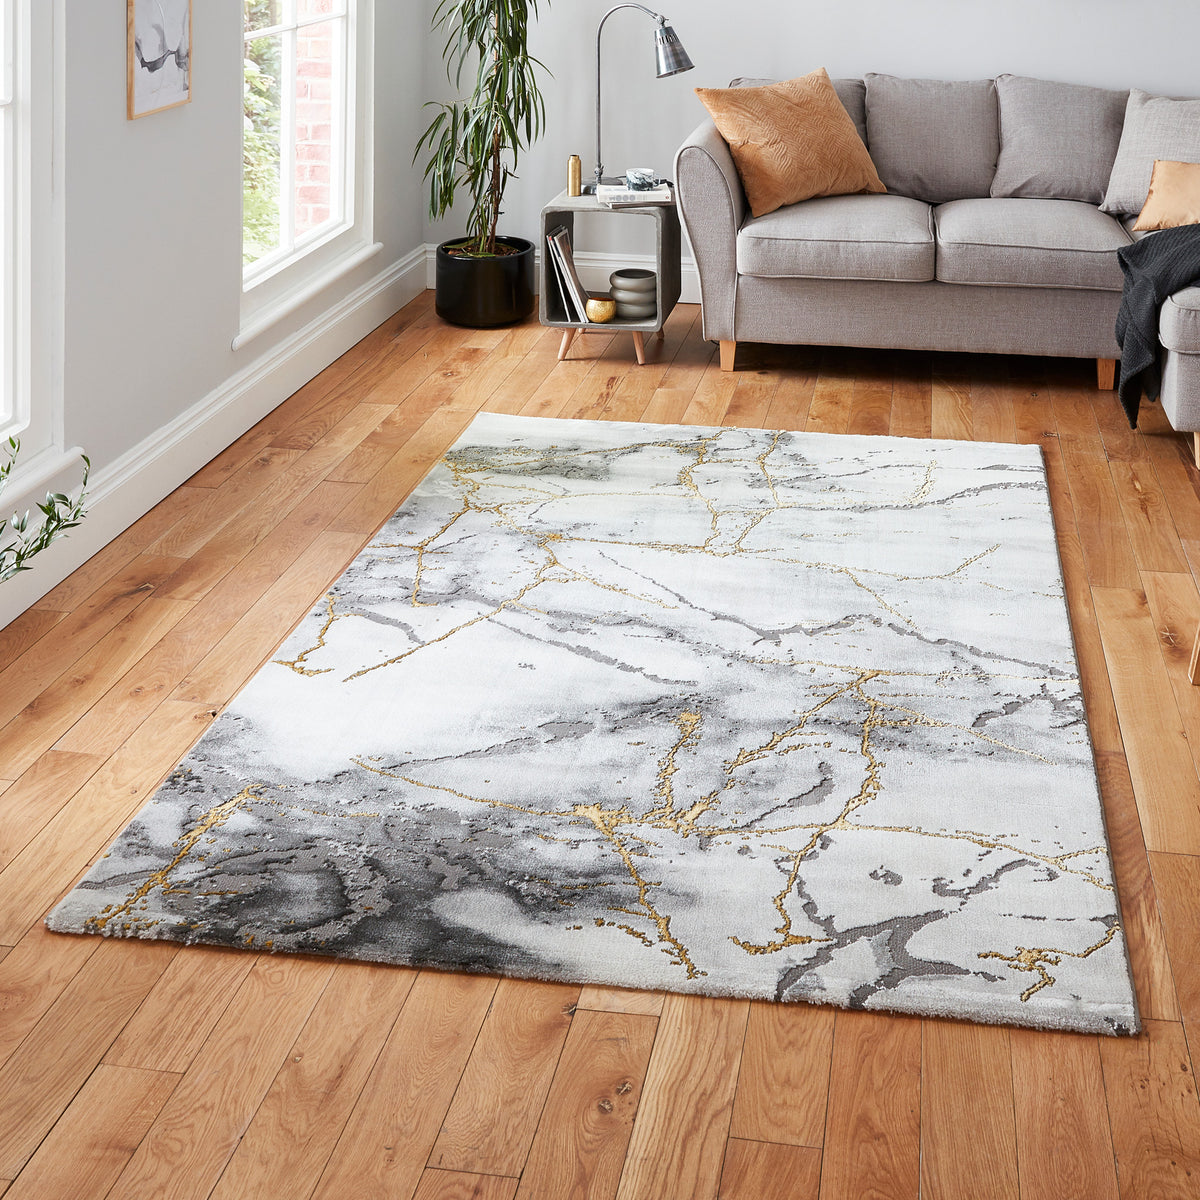 Fenway Gold Marble Effect Super Soft Rug for living room